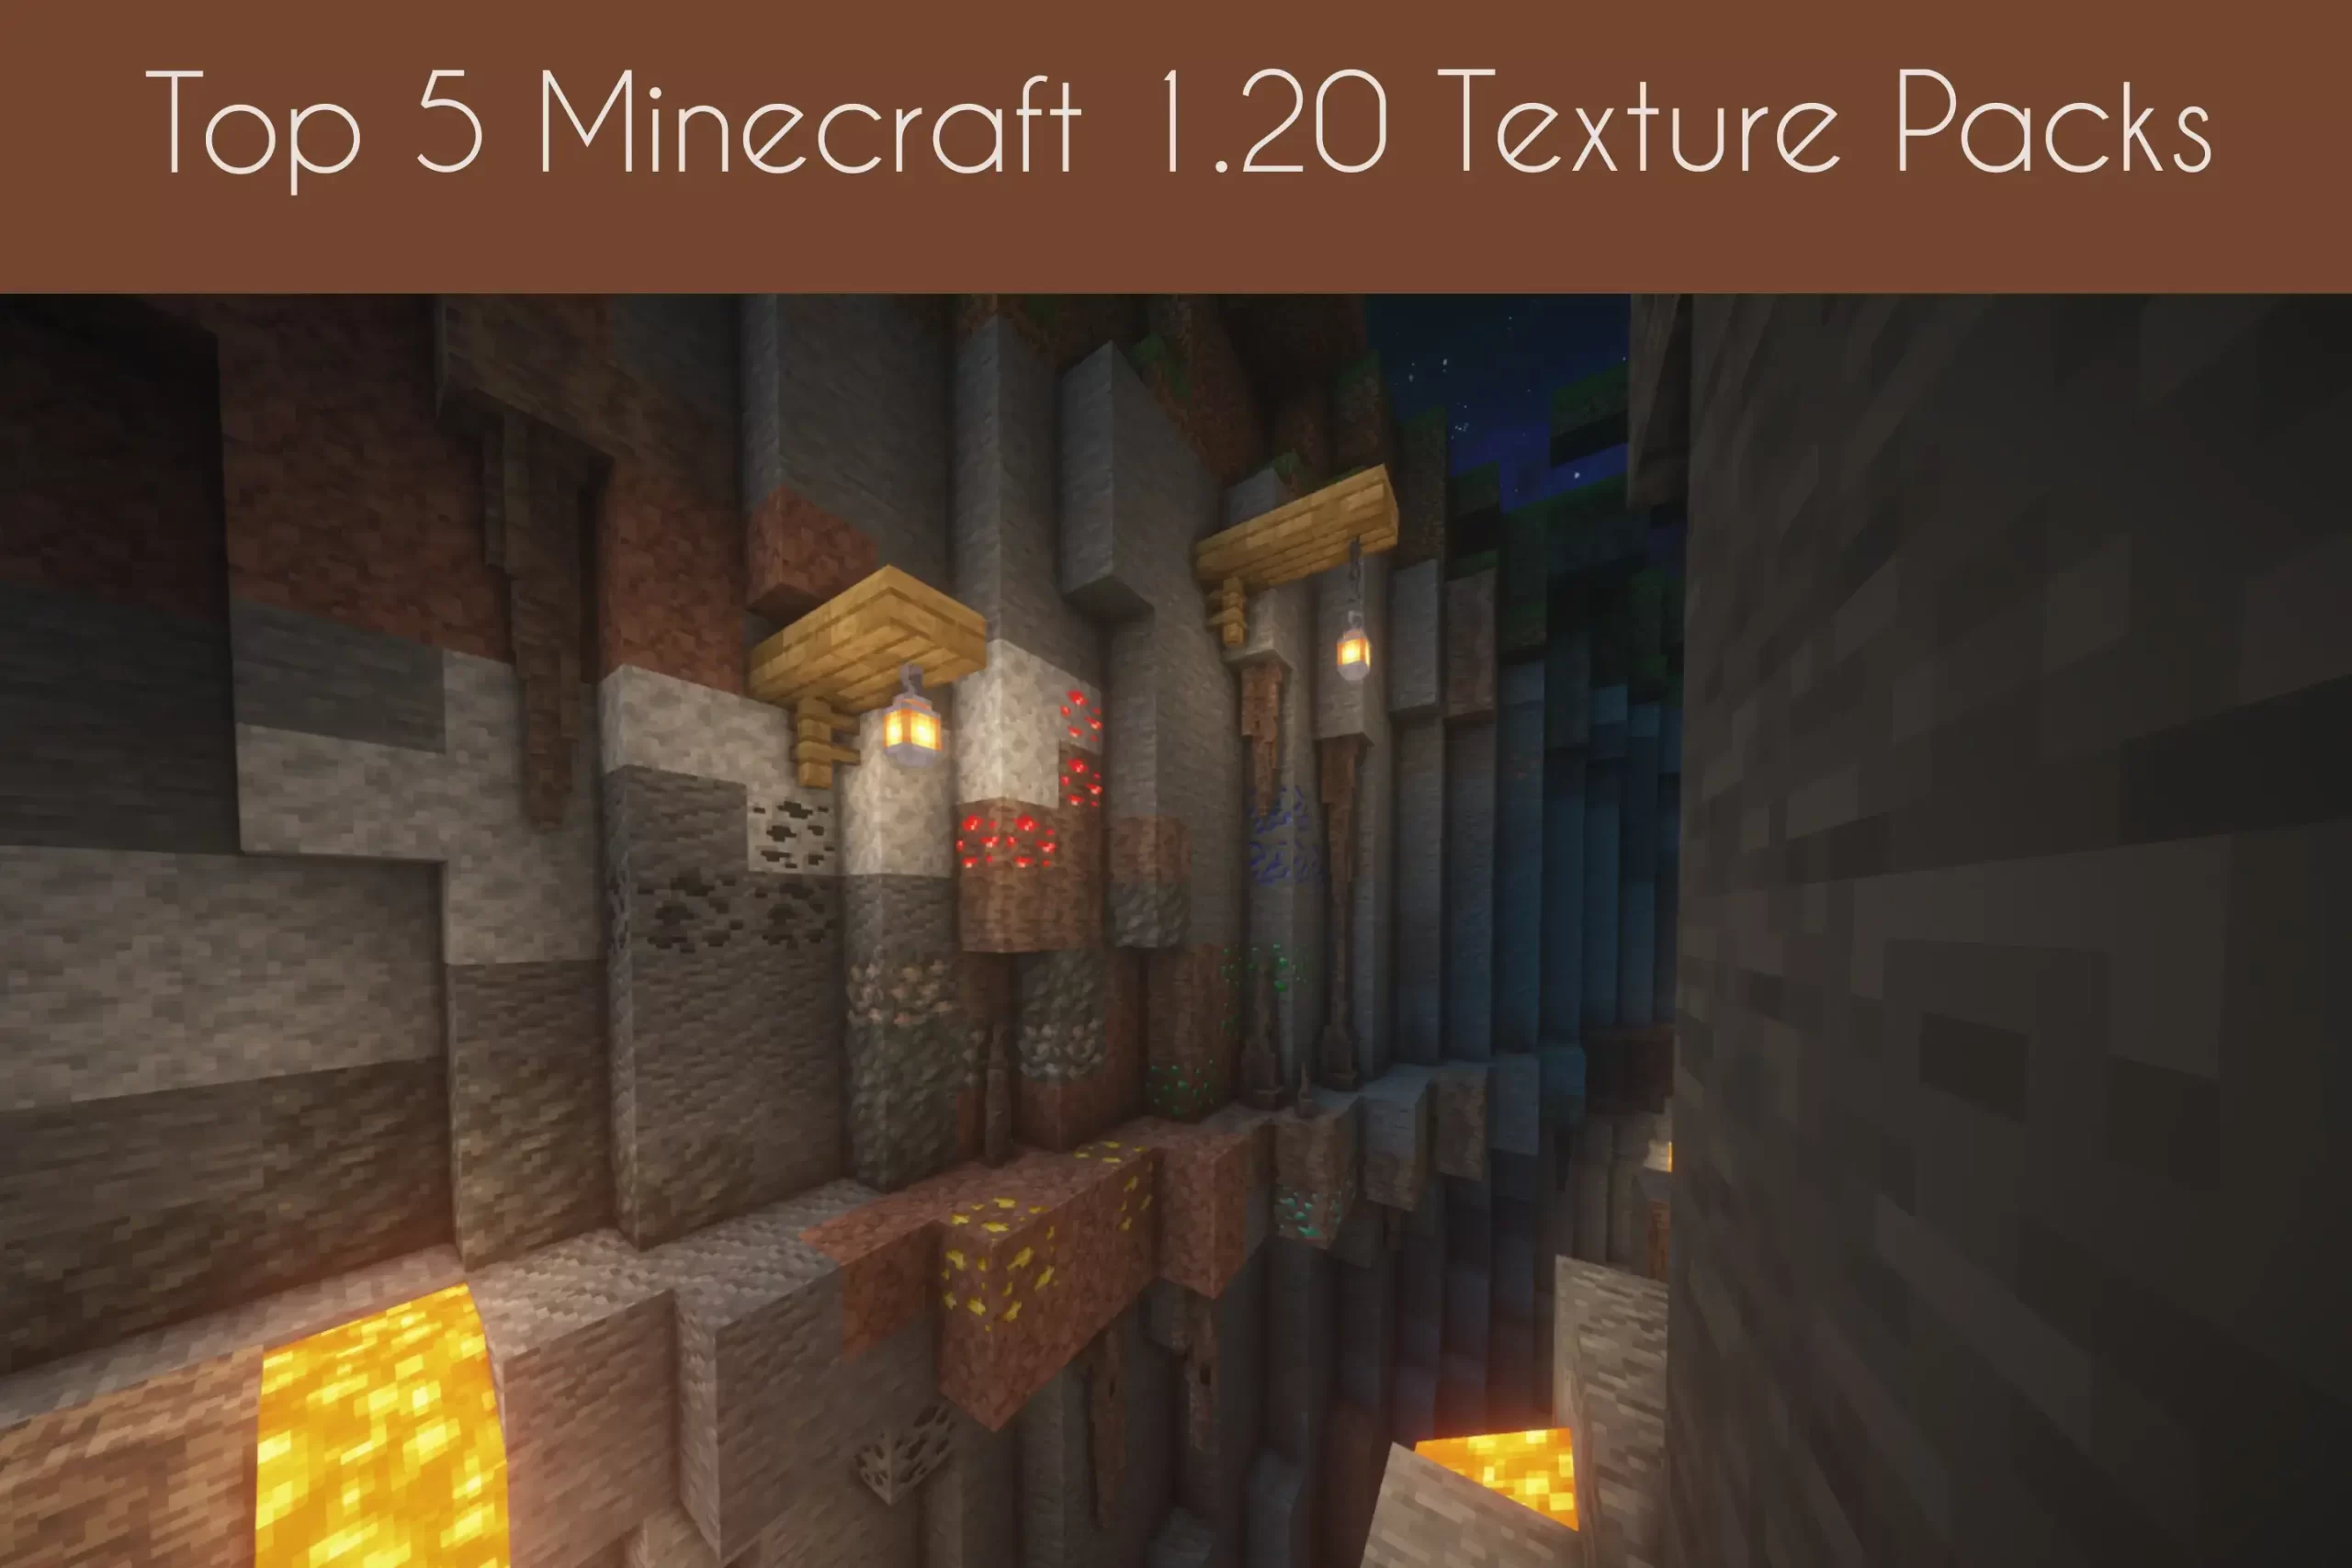 Top 5 Minecraft 1.20 Texture Packs